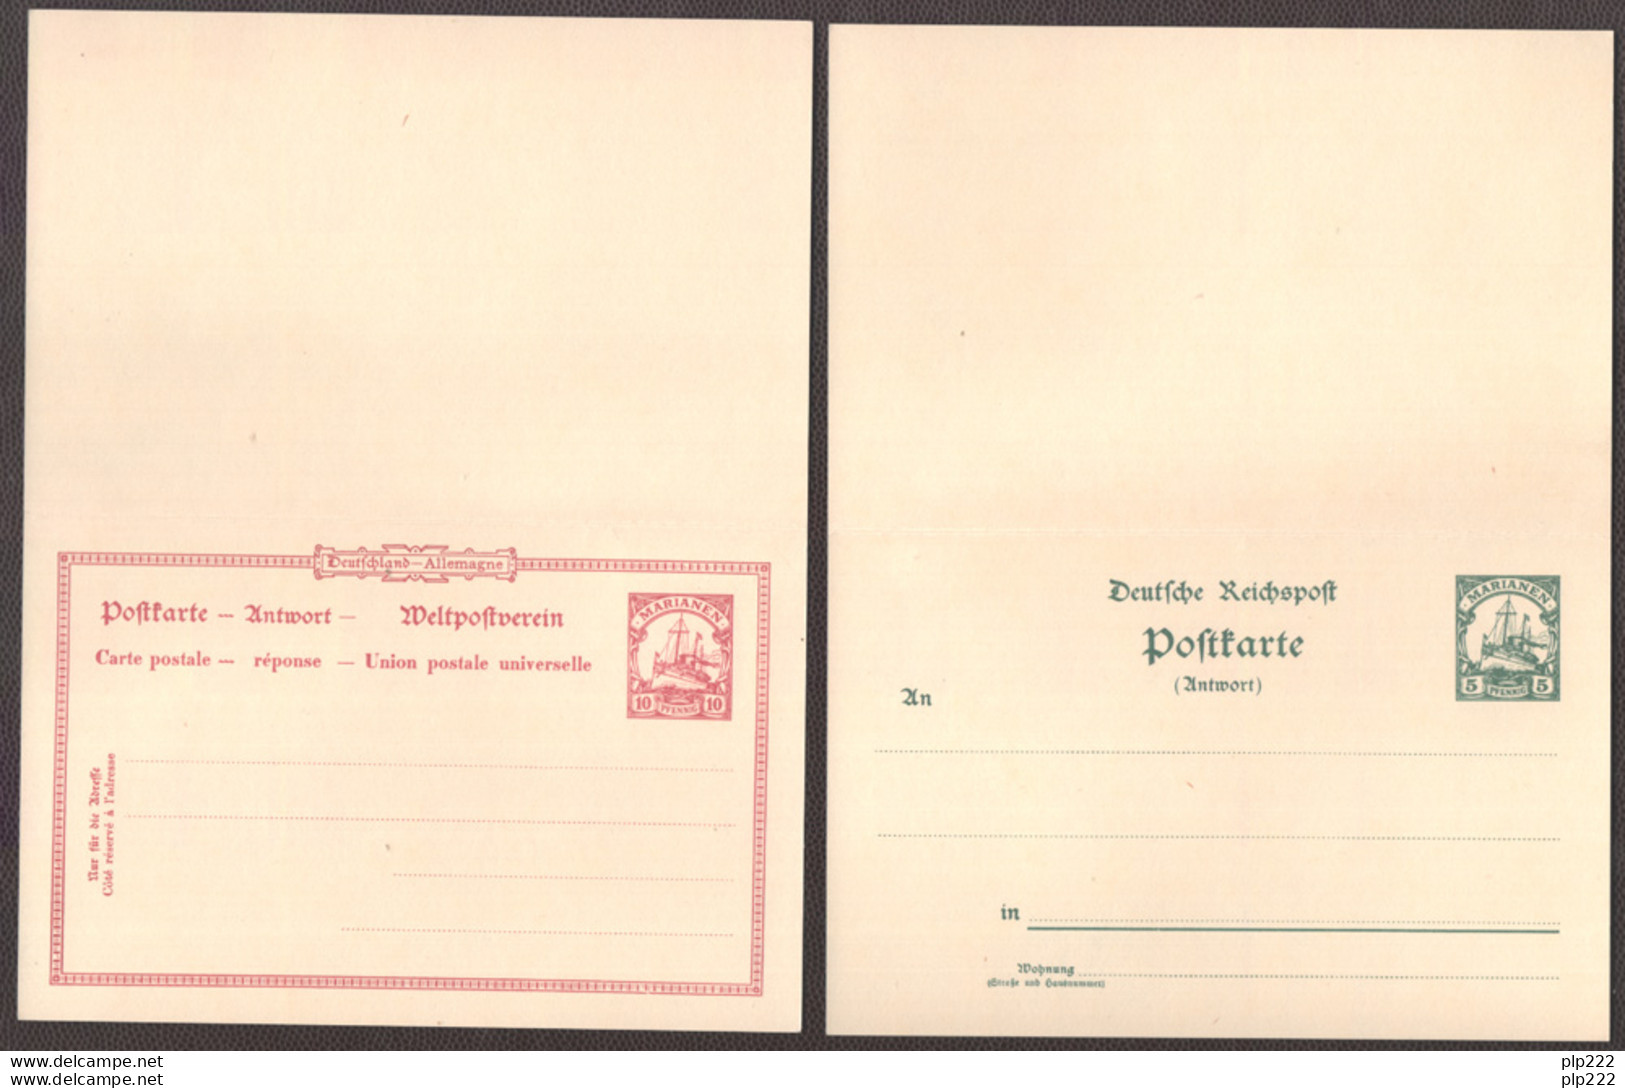 Isole Marianne 1900 2 Postal Card "Postkarte" 5-10pf. Risposta Pagata - Paid Response VF - Mariana Islands